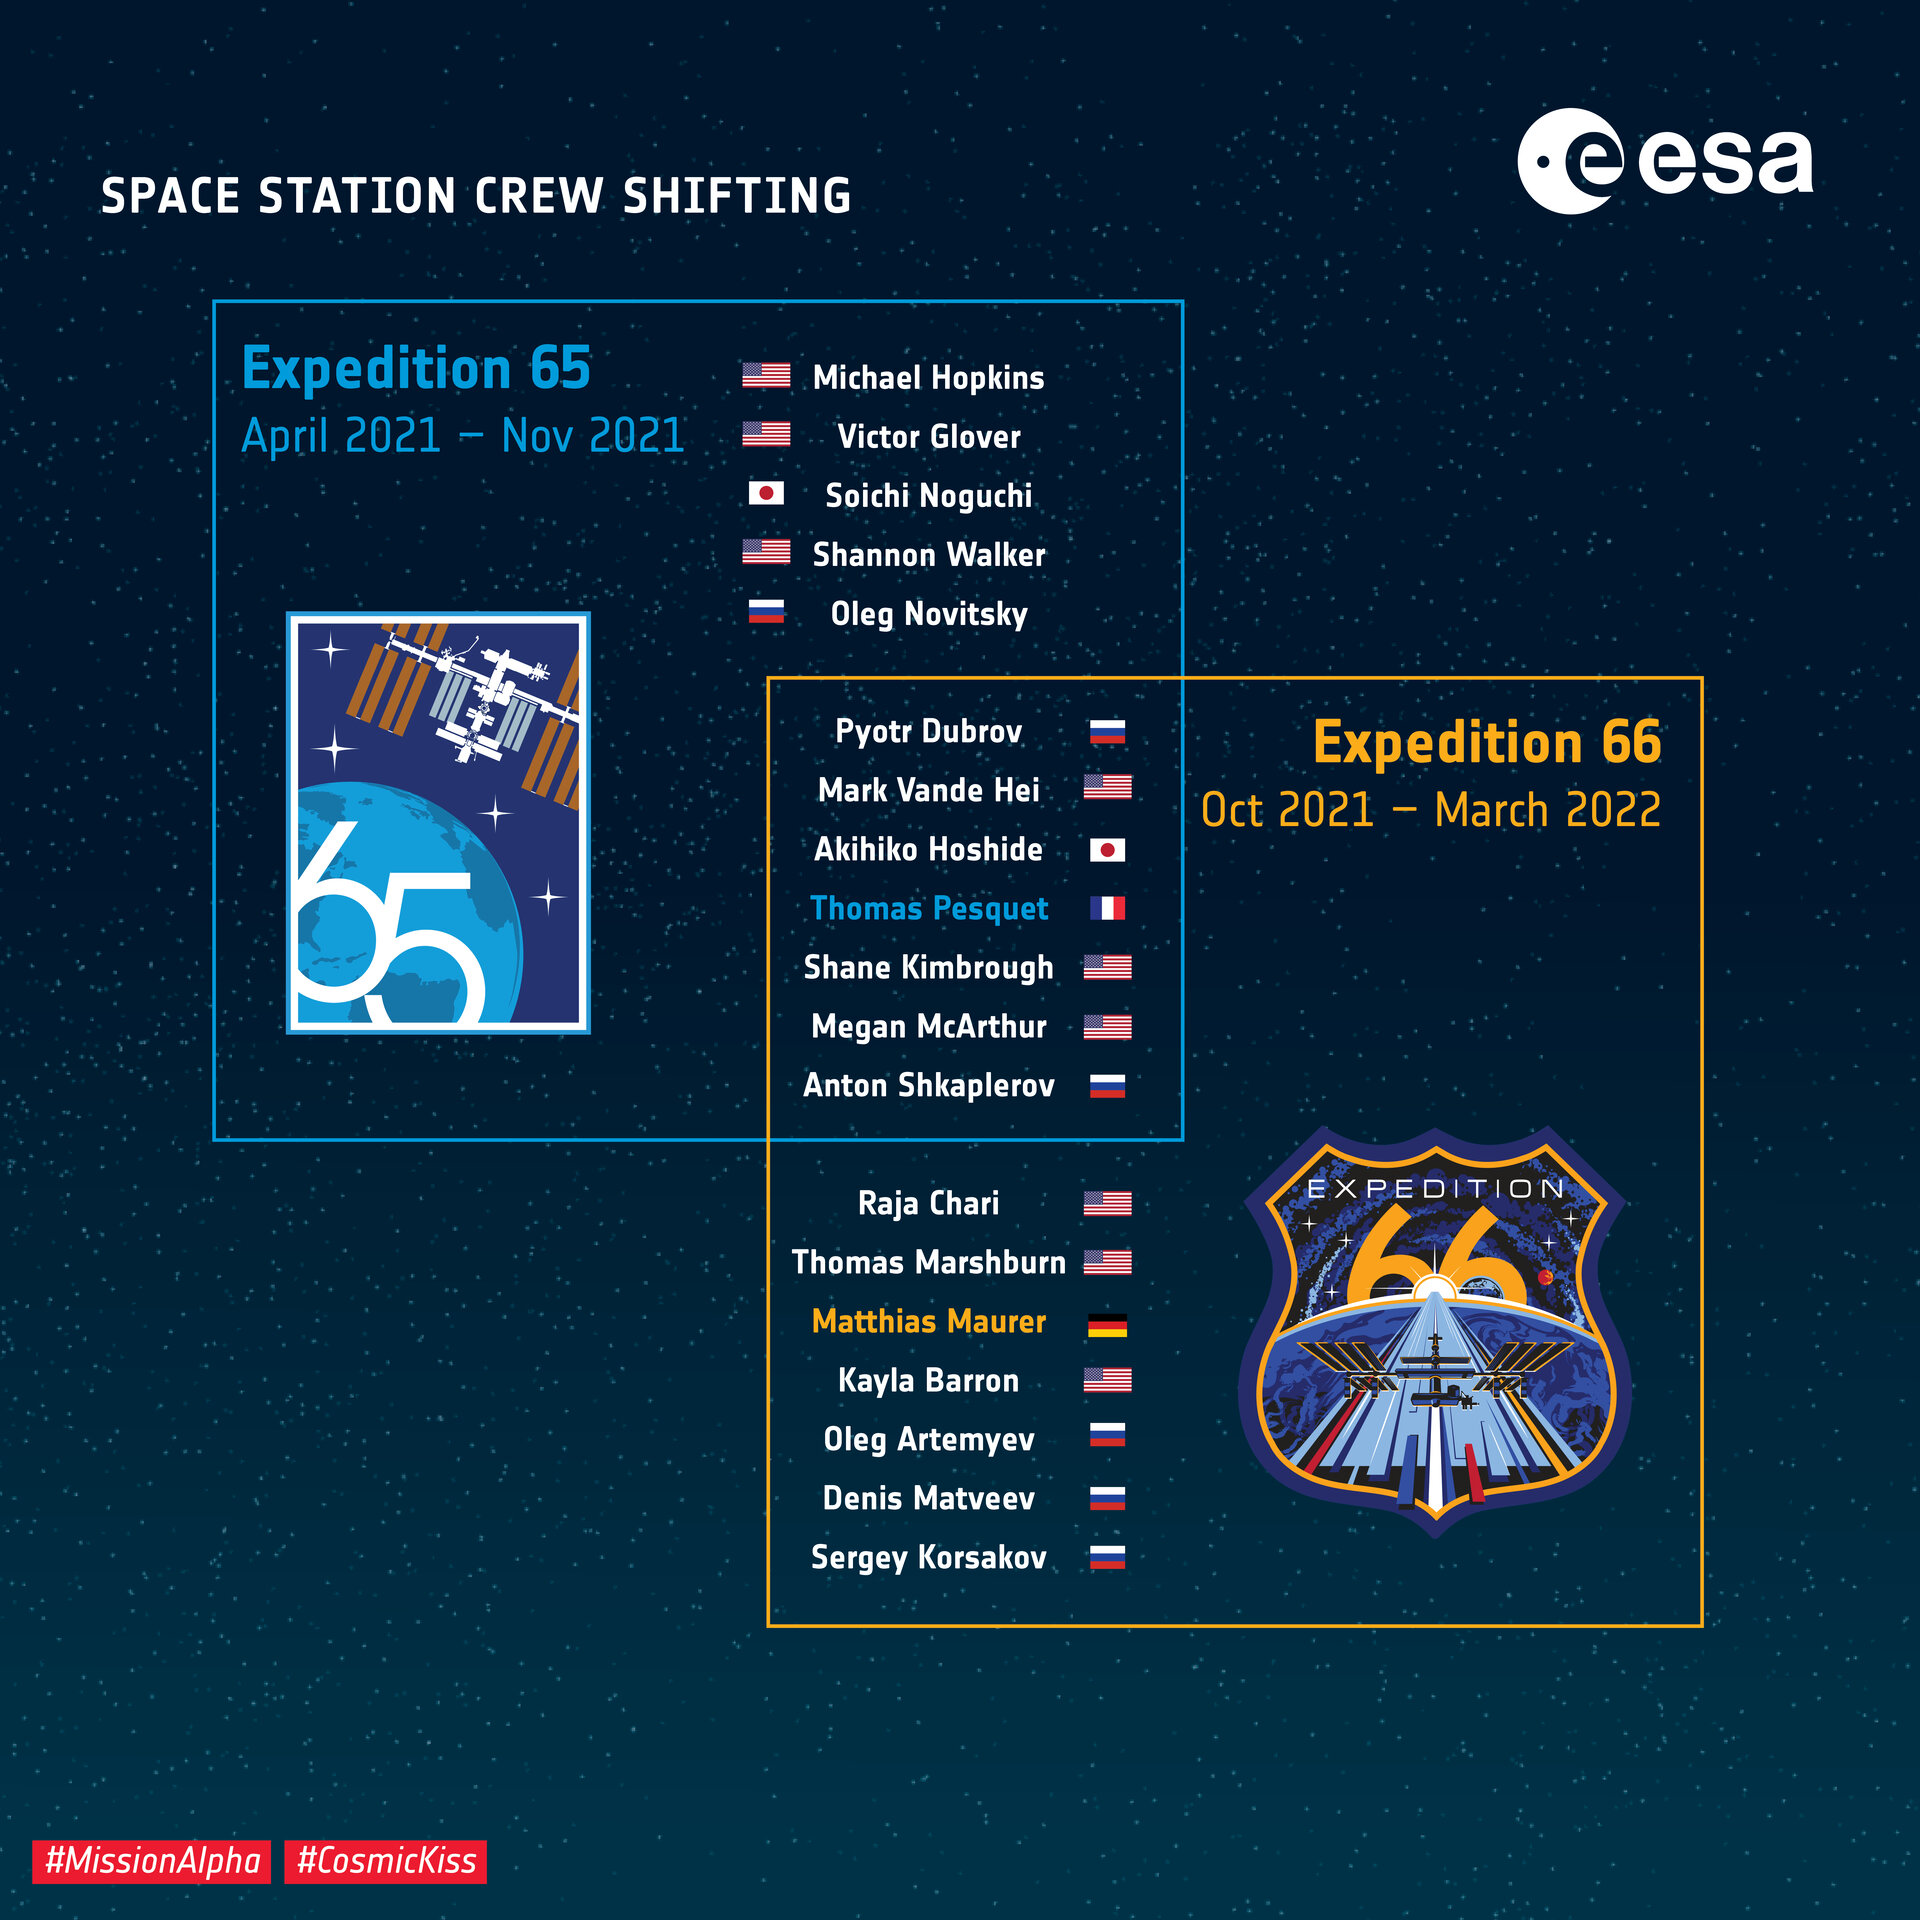 Expedition 65 - 66 crew